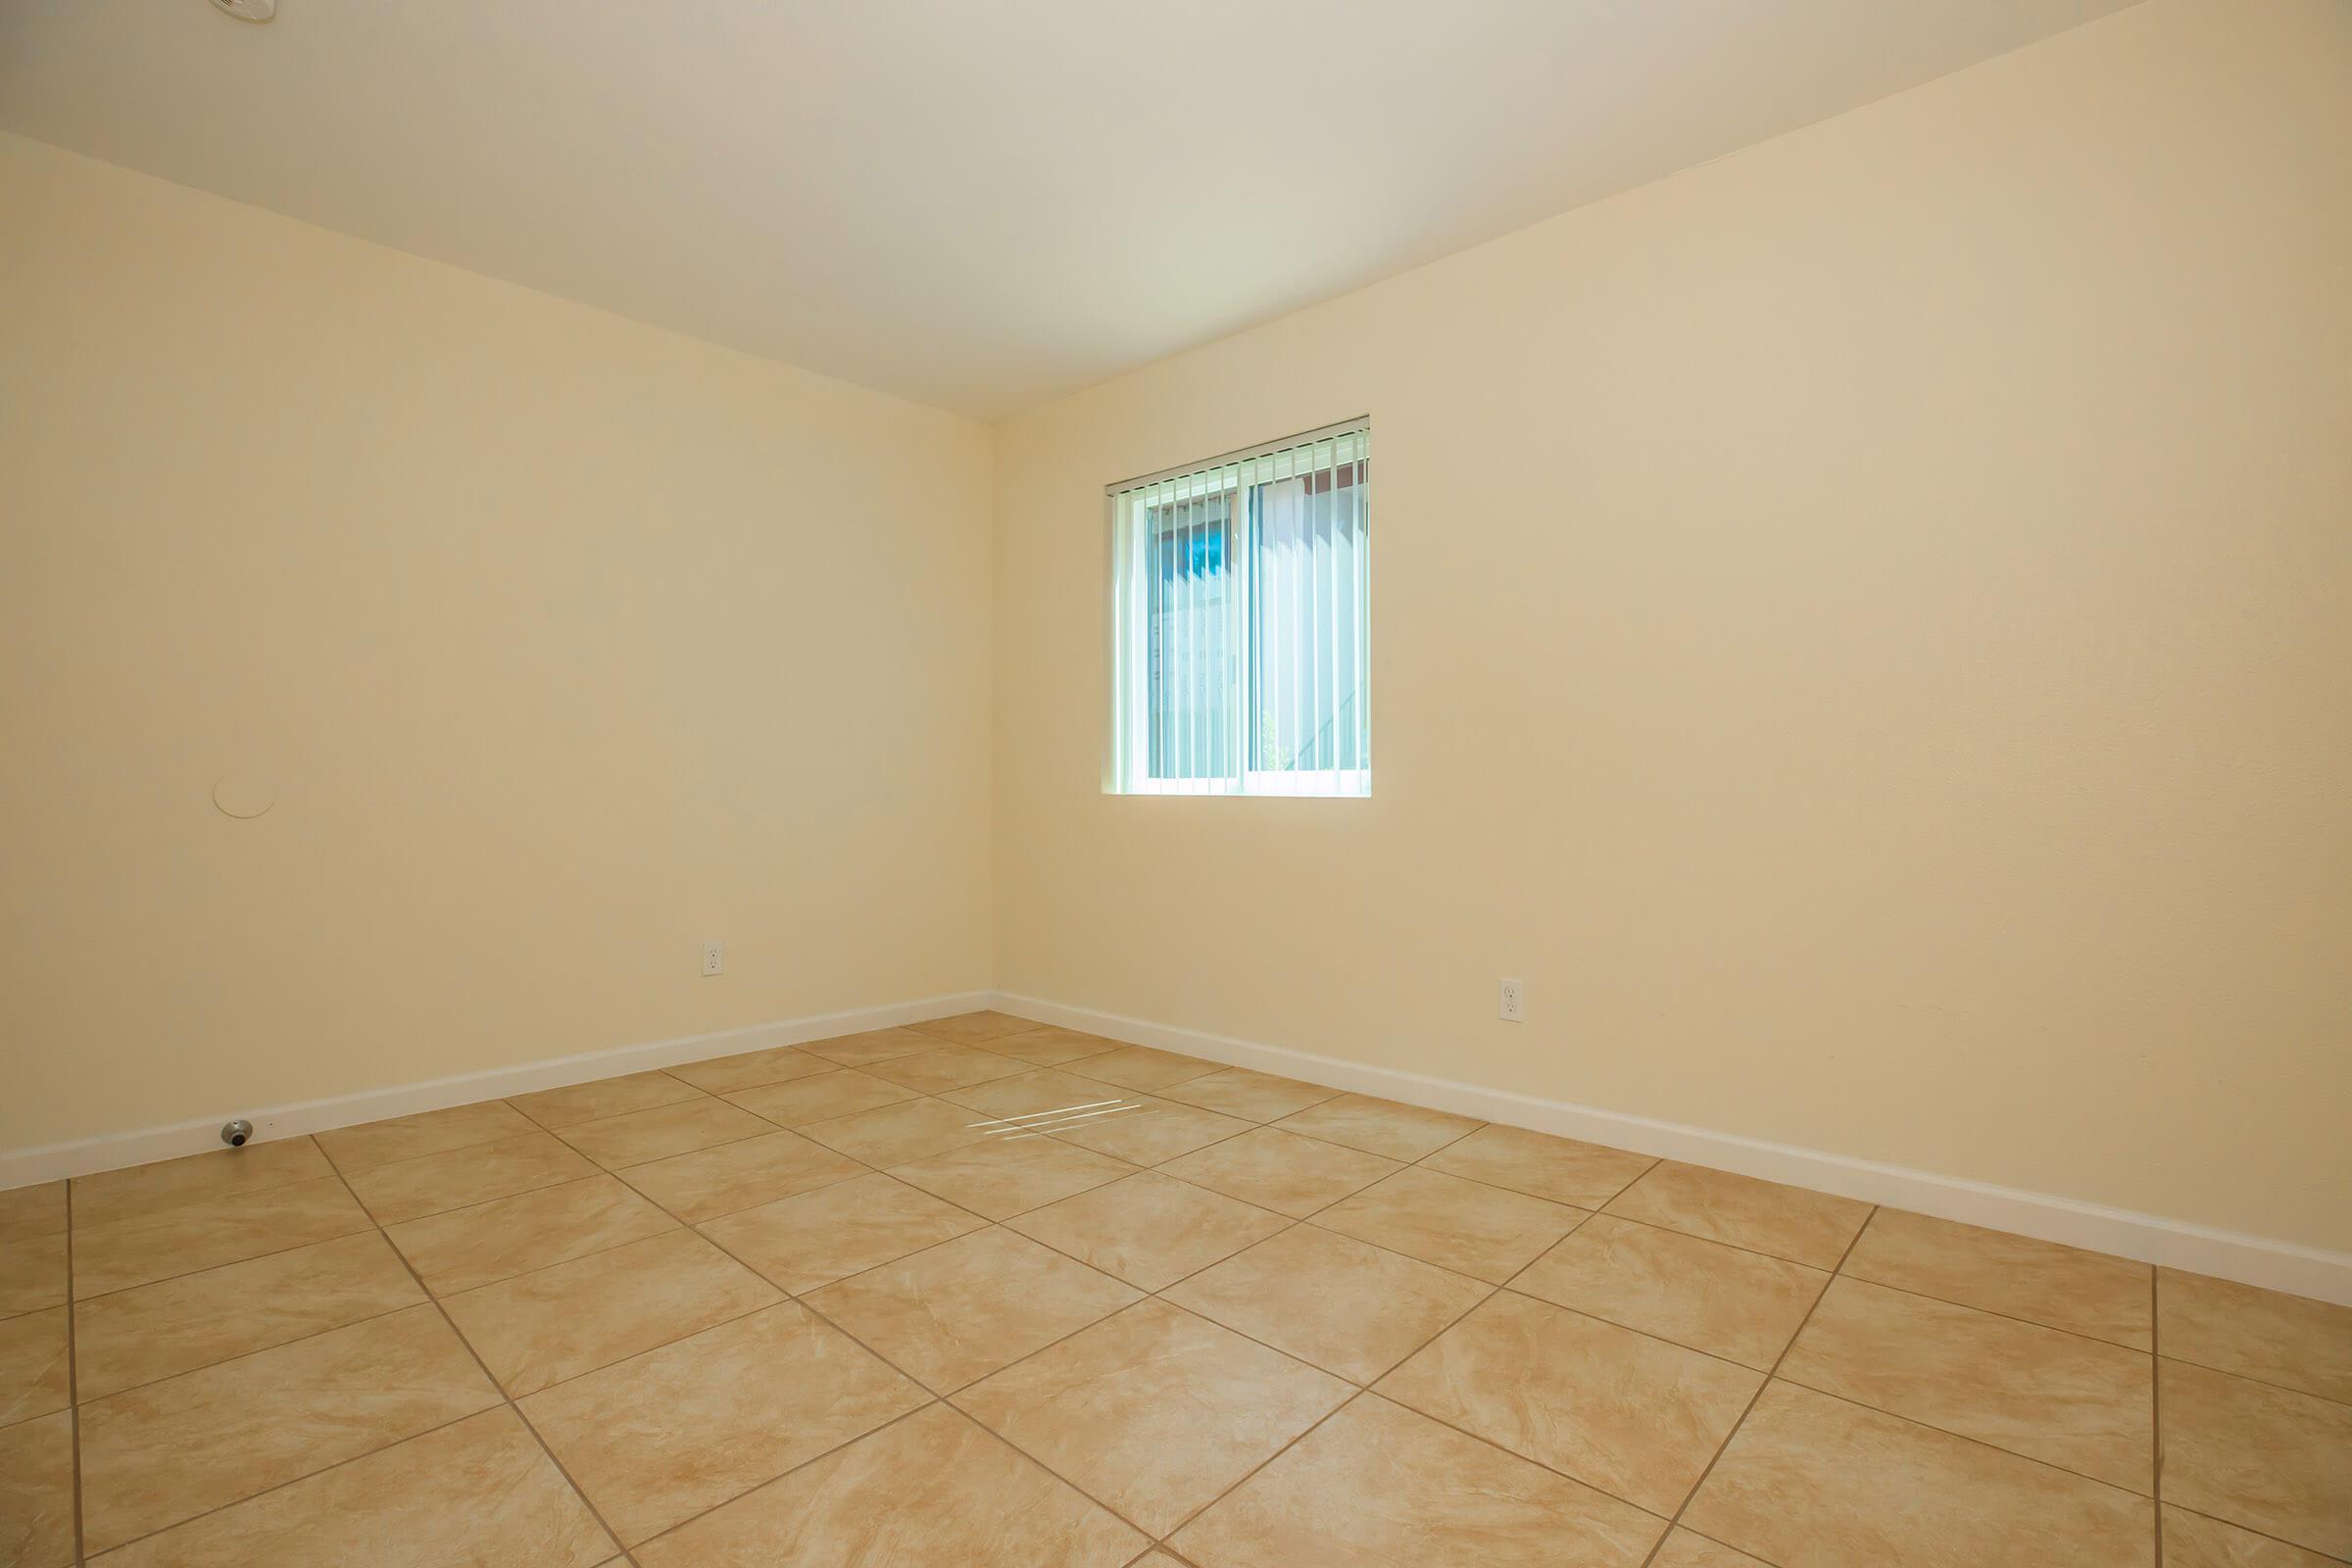 a room with a tile floor